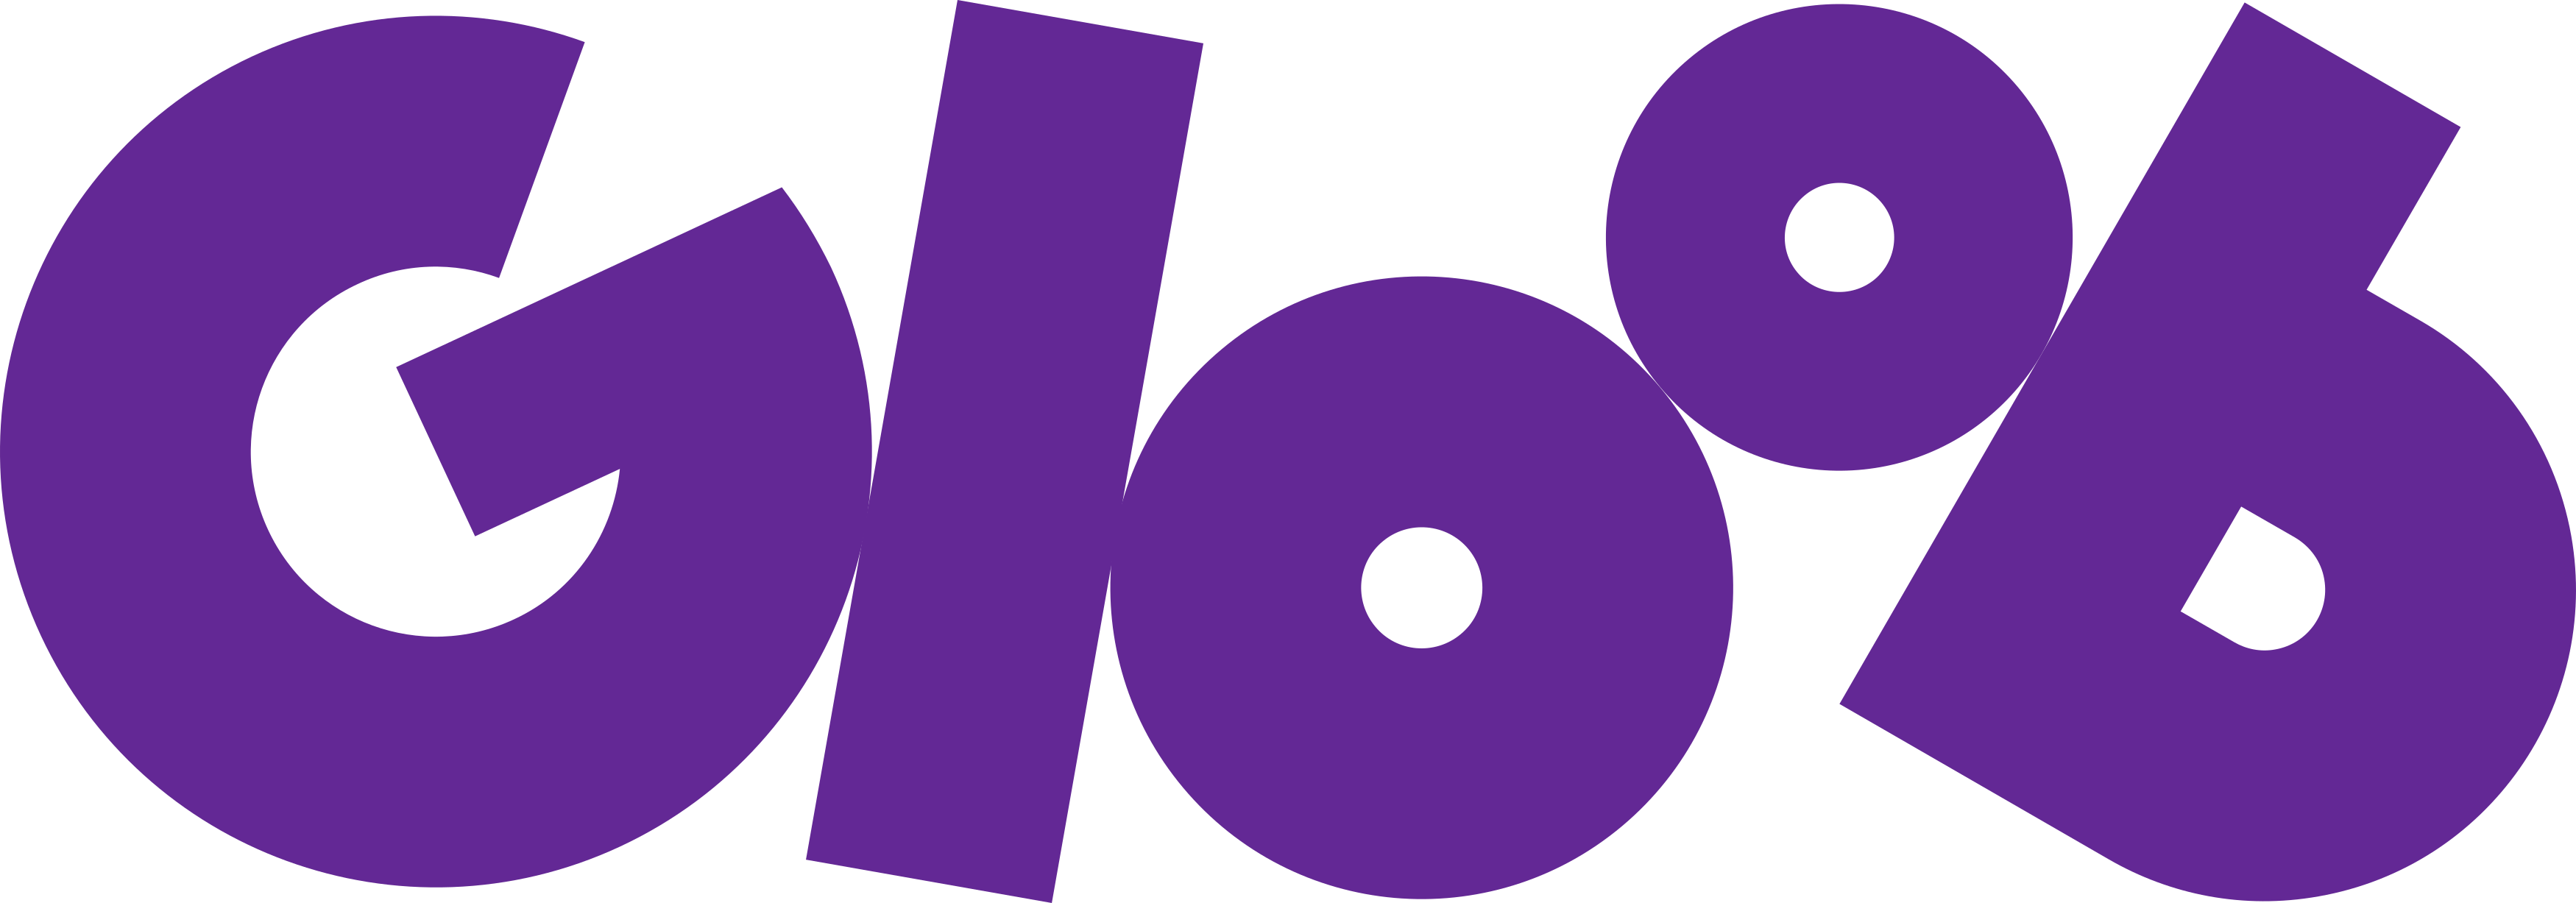 Gloob Logo - Canal Gloob Logo - PNG e Vetor - Download de Logotipos